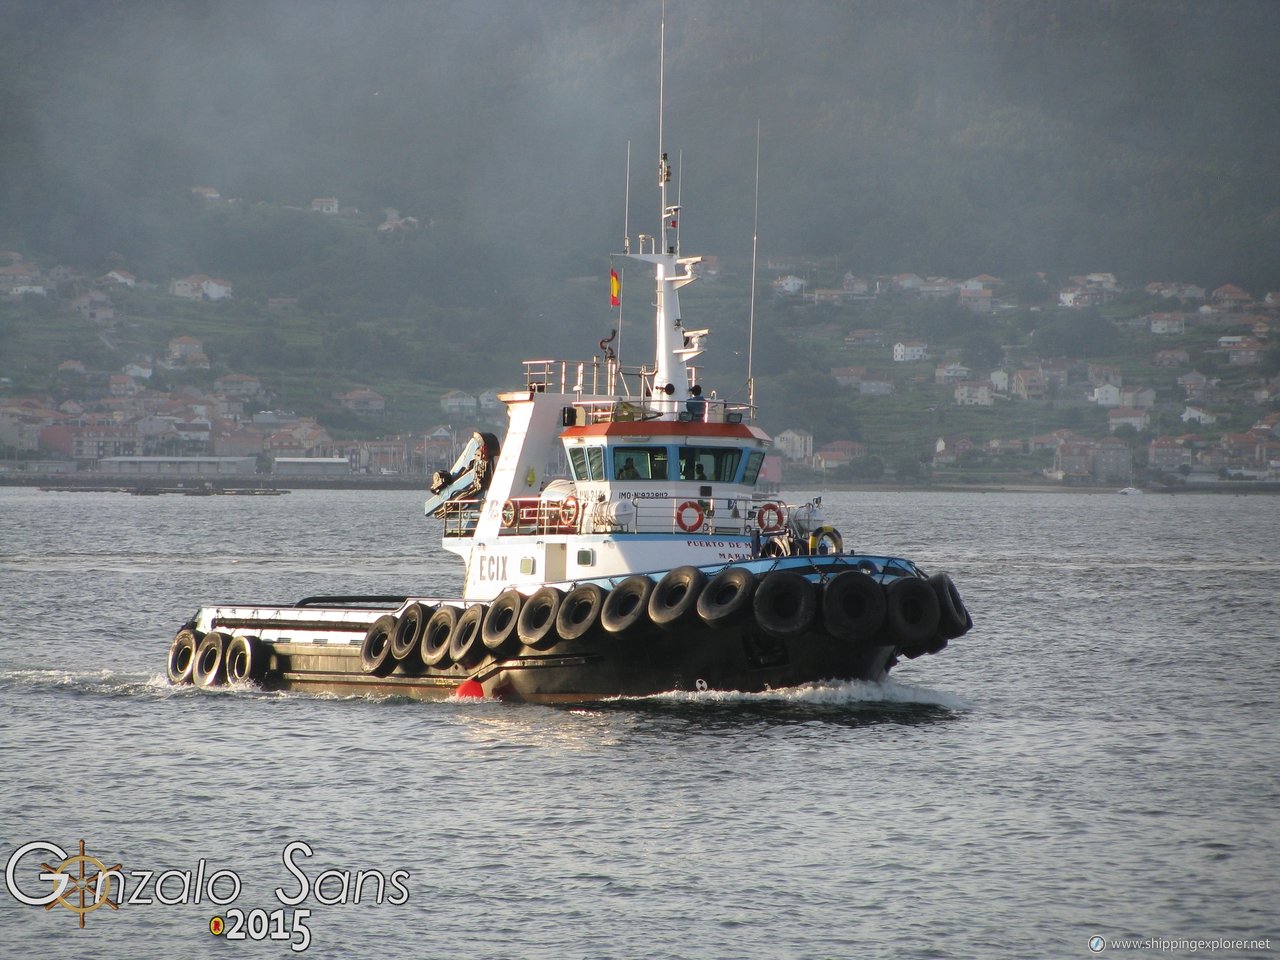 Puerto De Marin